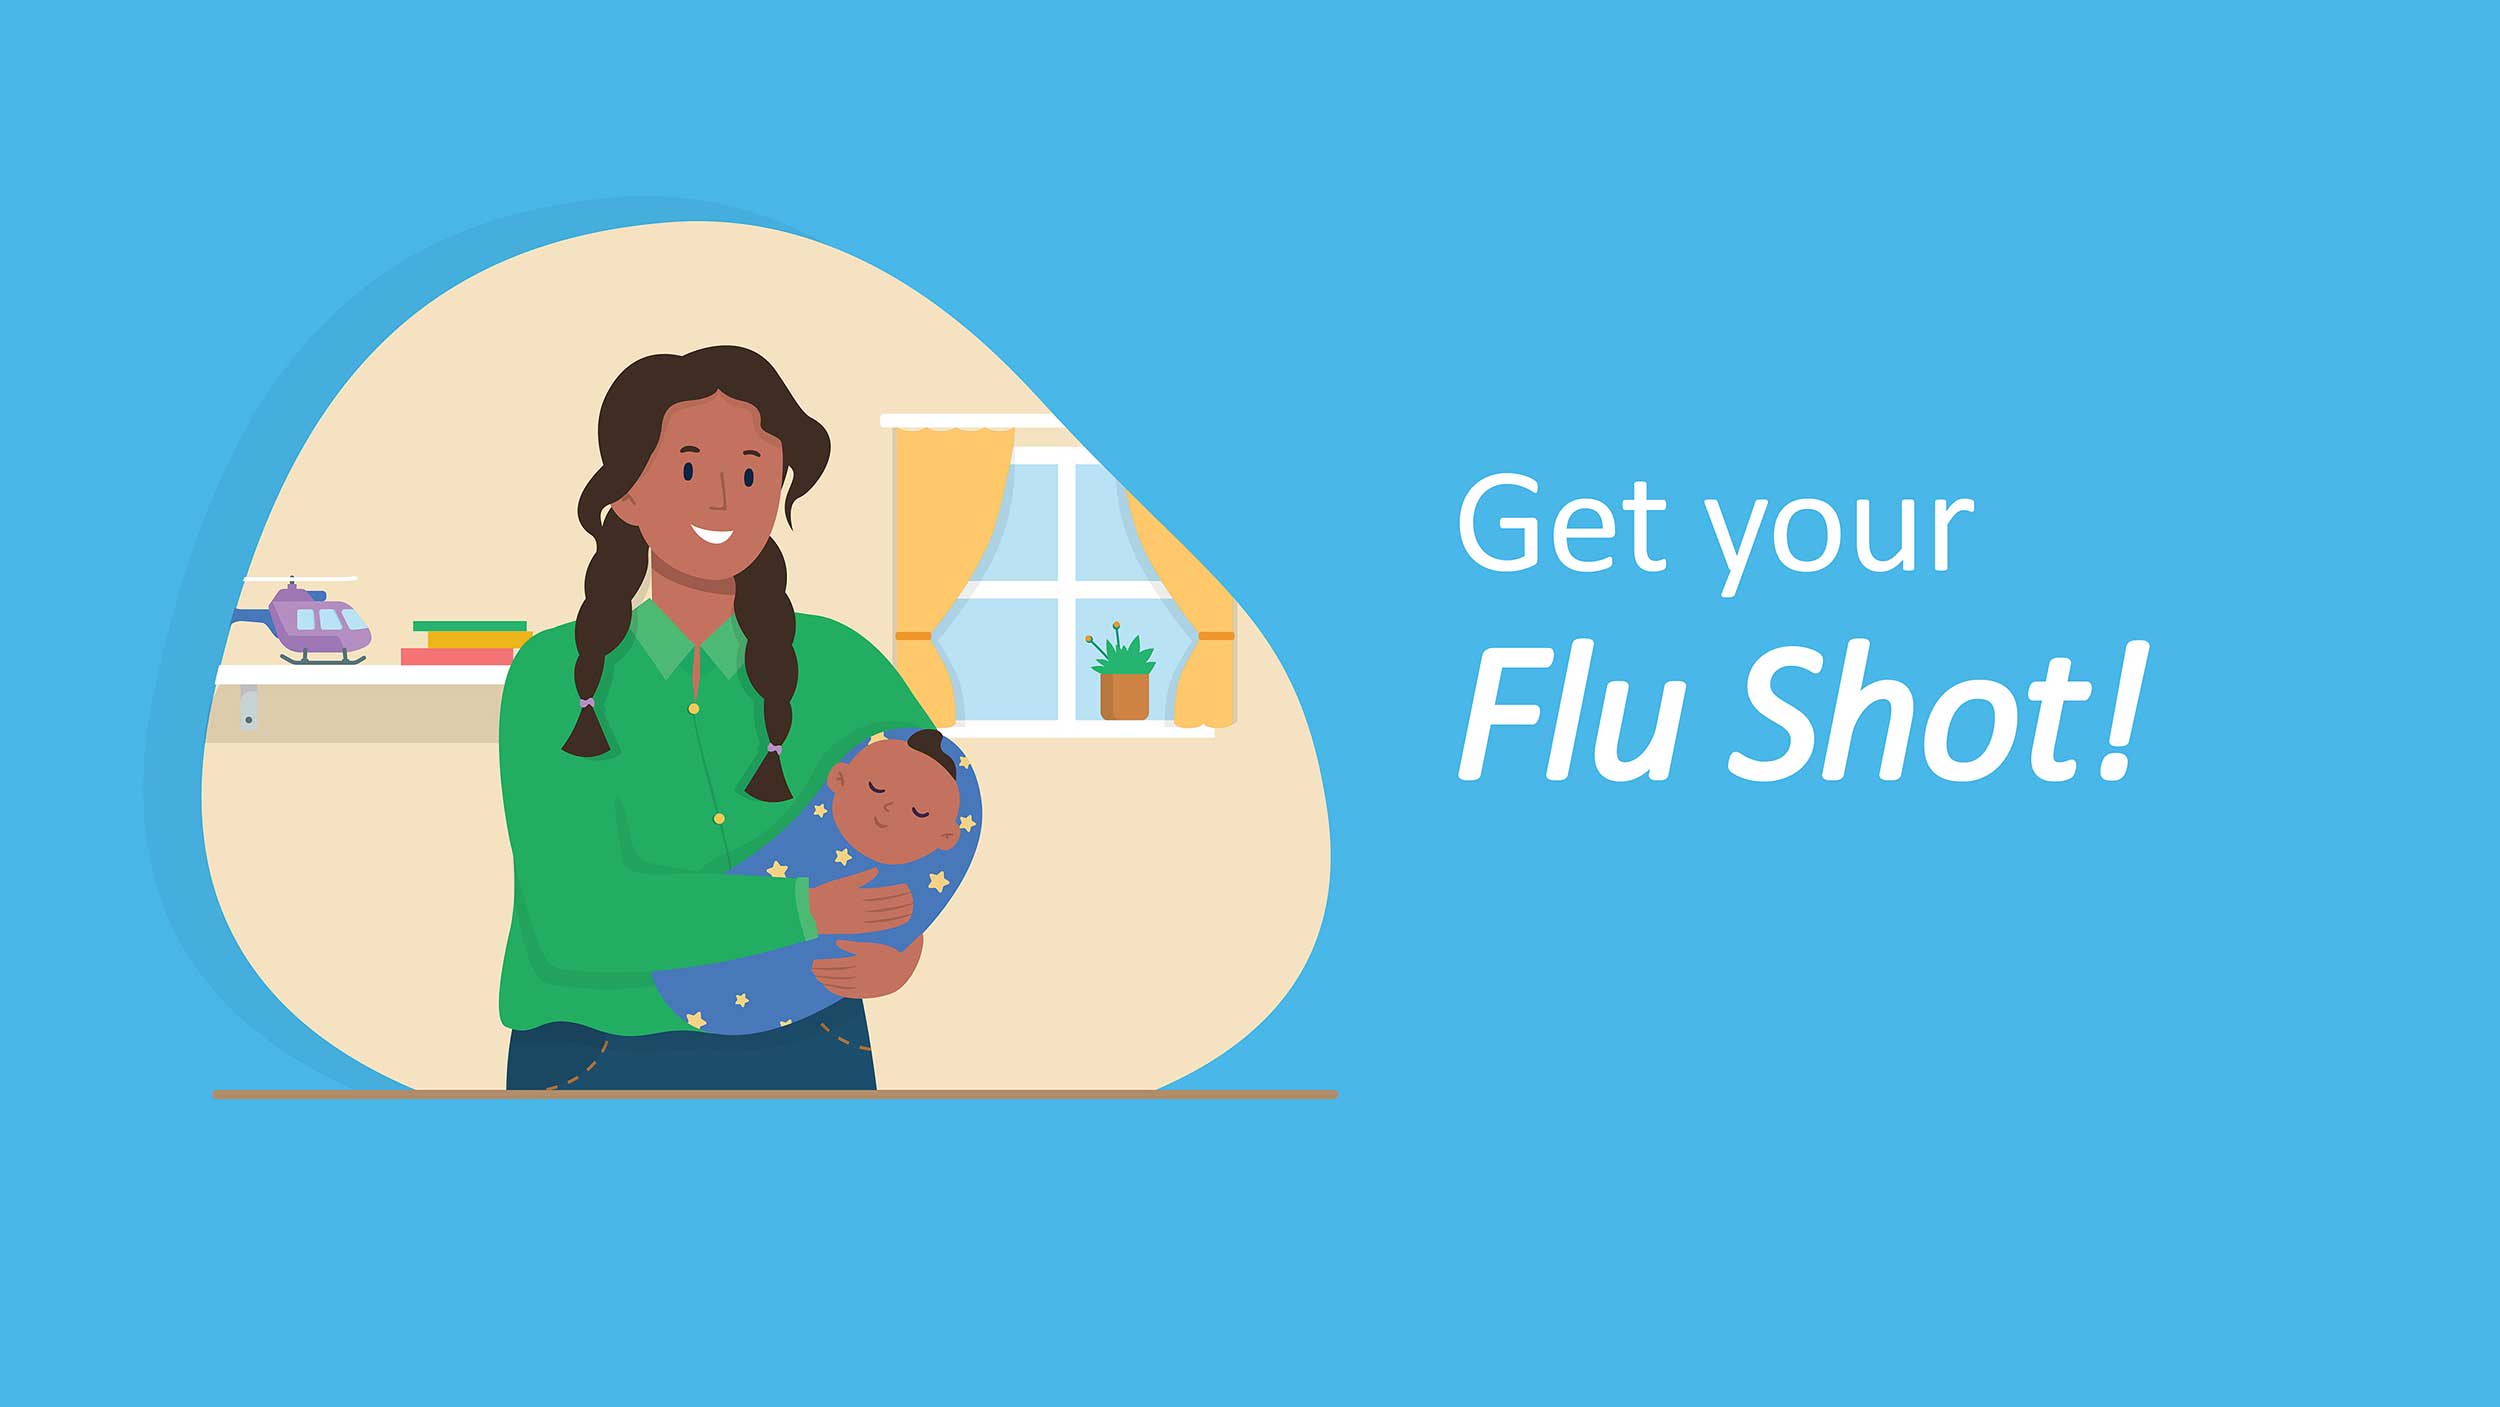 Get Your Flu Shot!